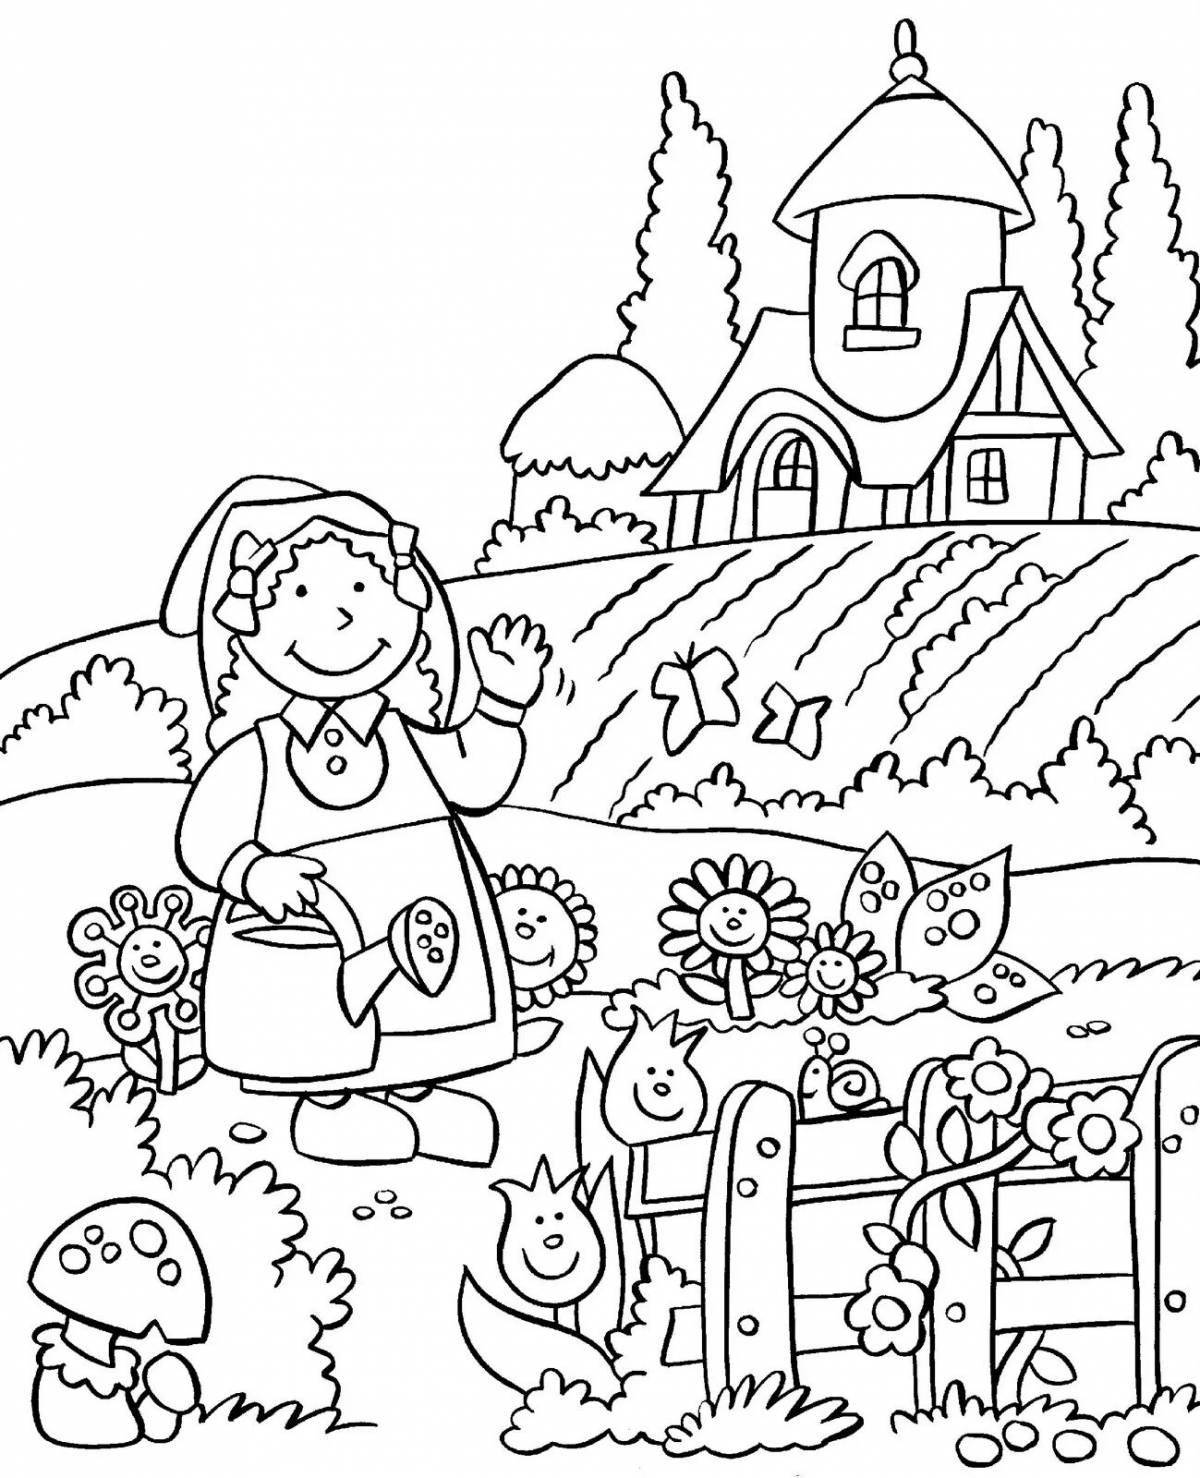 Sunny garden coloring book for kids